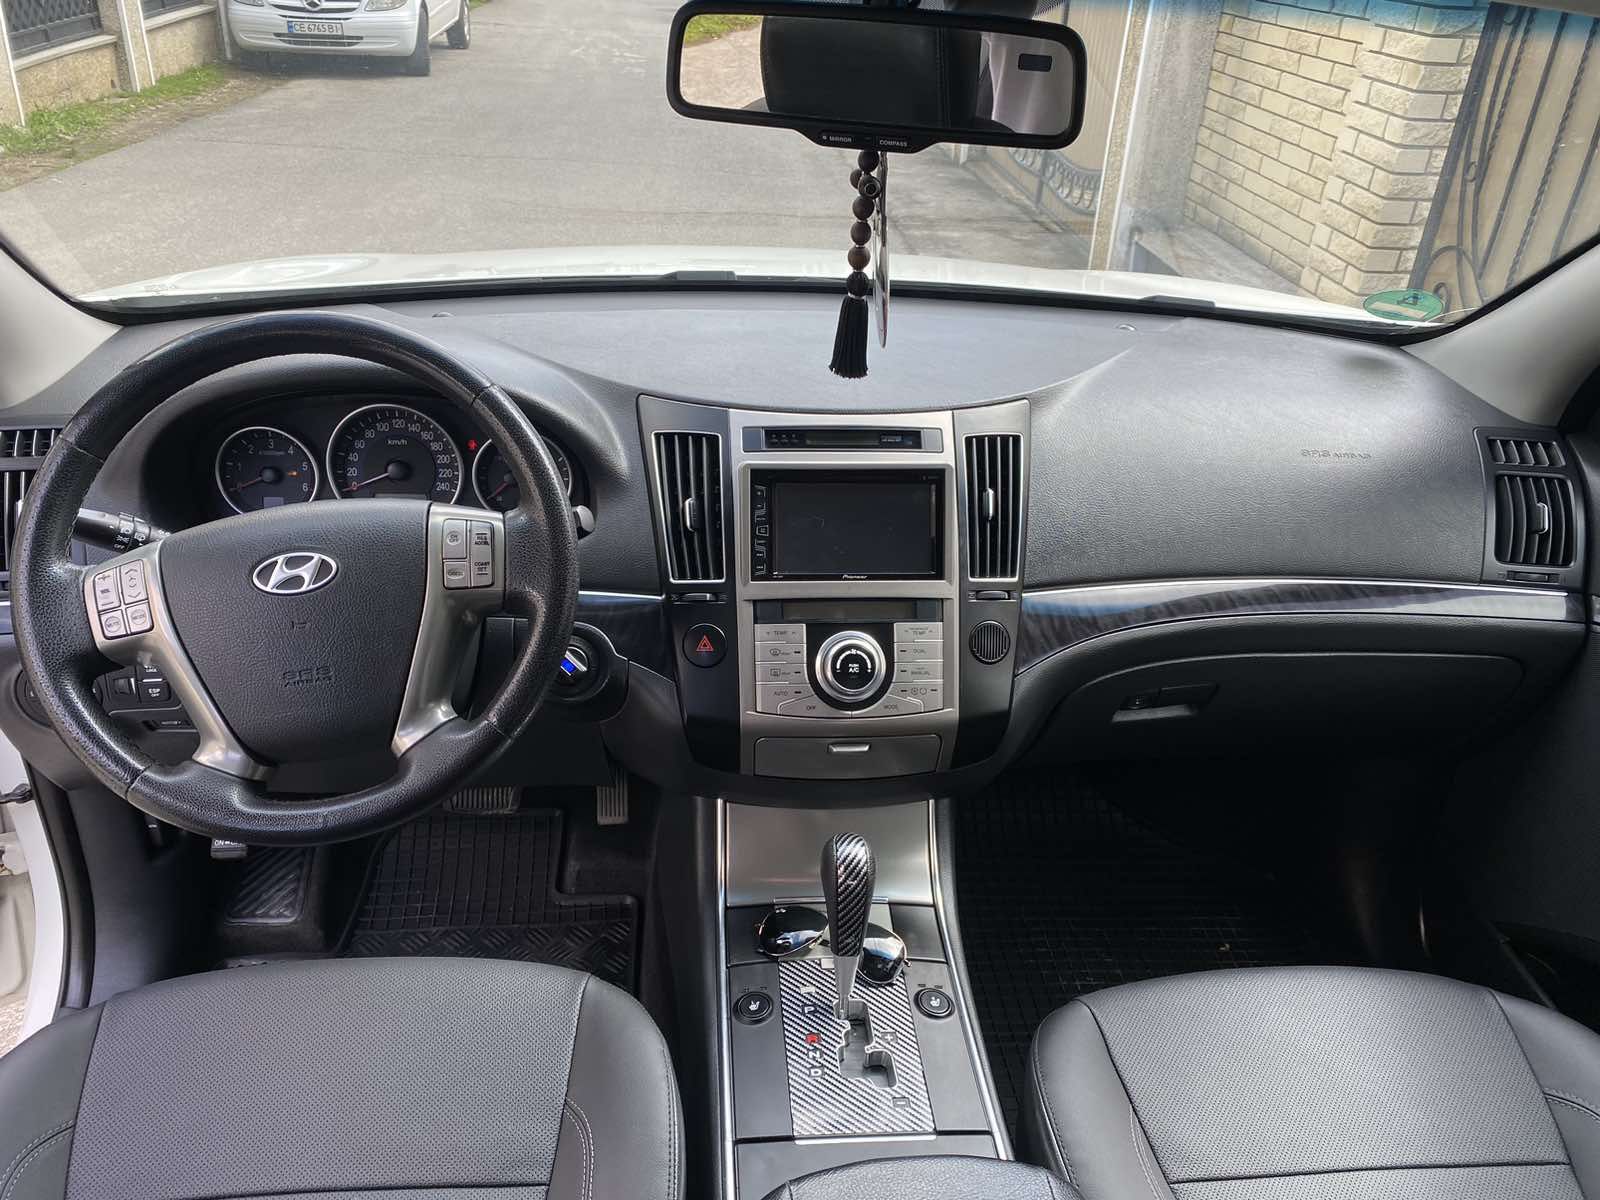 Продам машину Hyundai Ix 55(Veracruz))